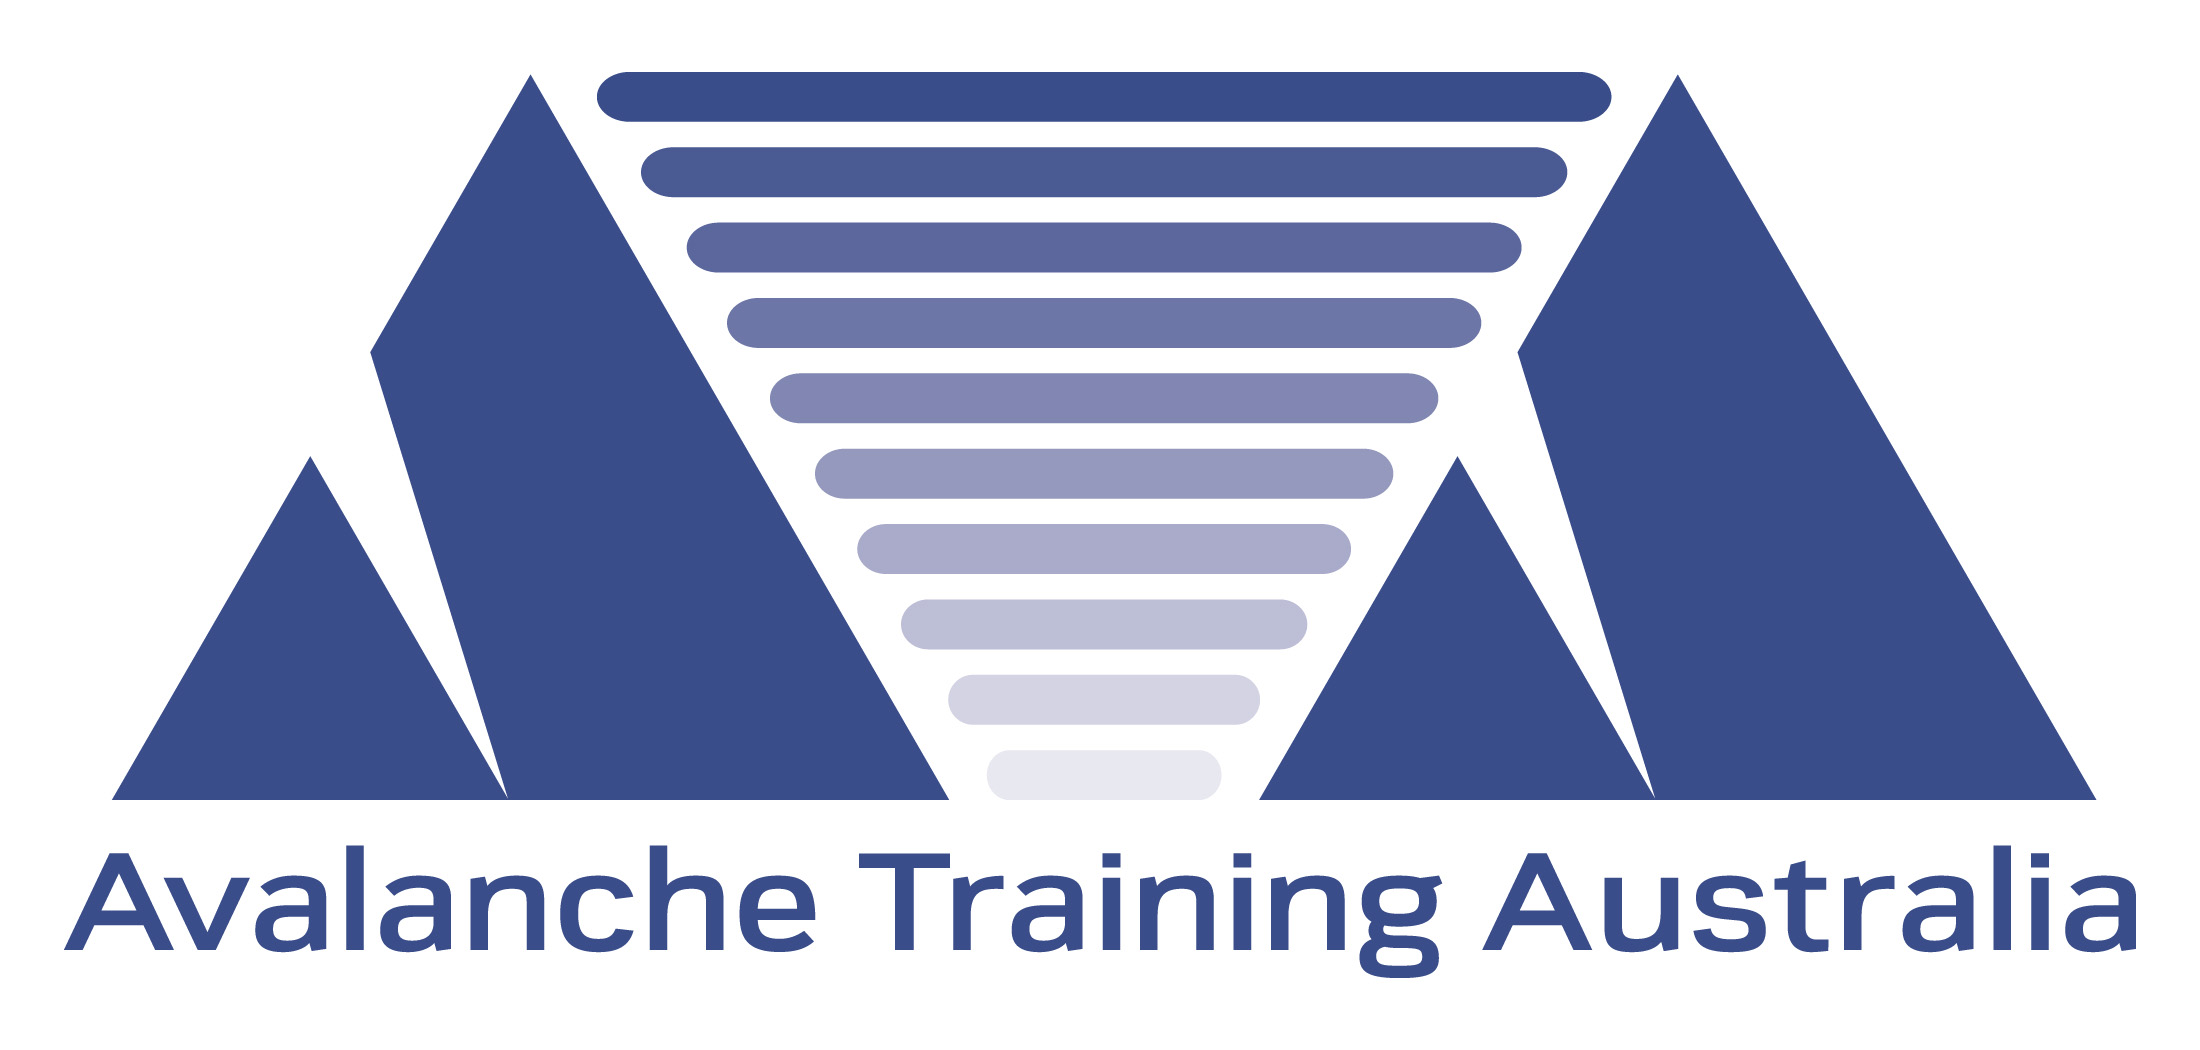 Avalanche Training Australia logo